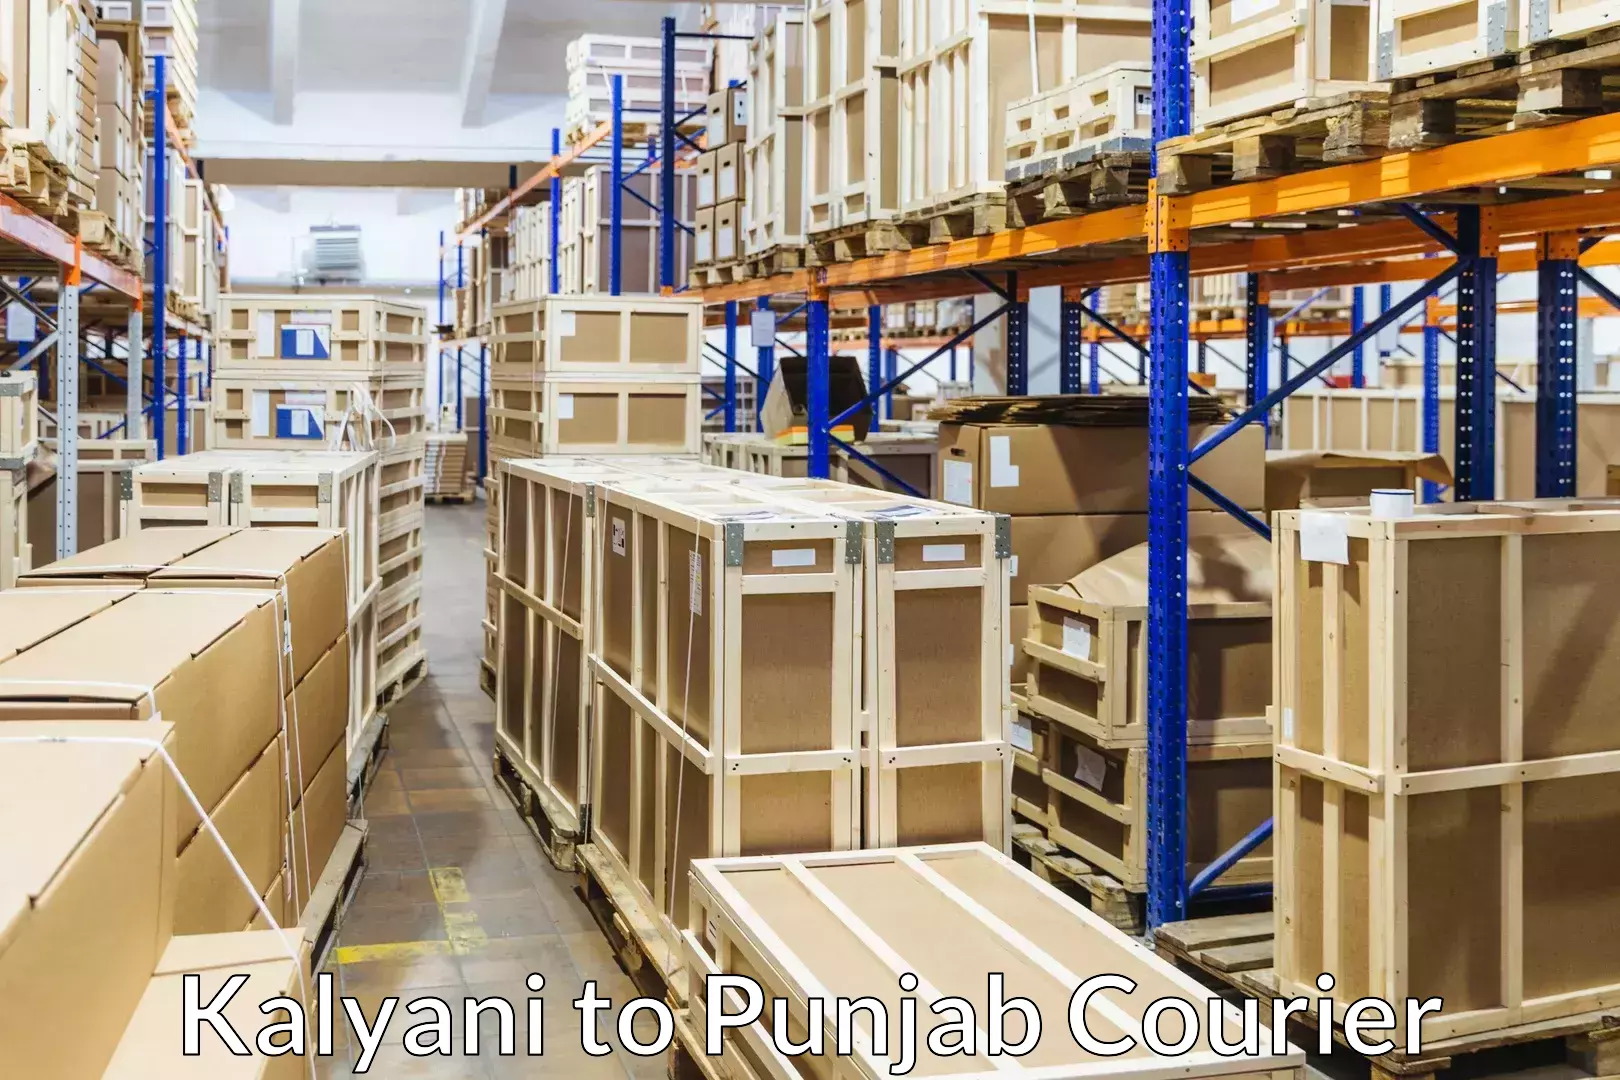 Customized relocation services Kalyani to Punjab